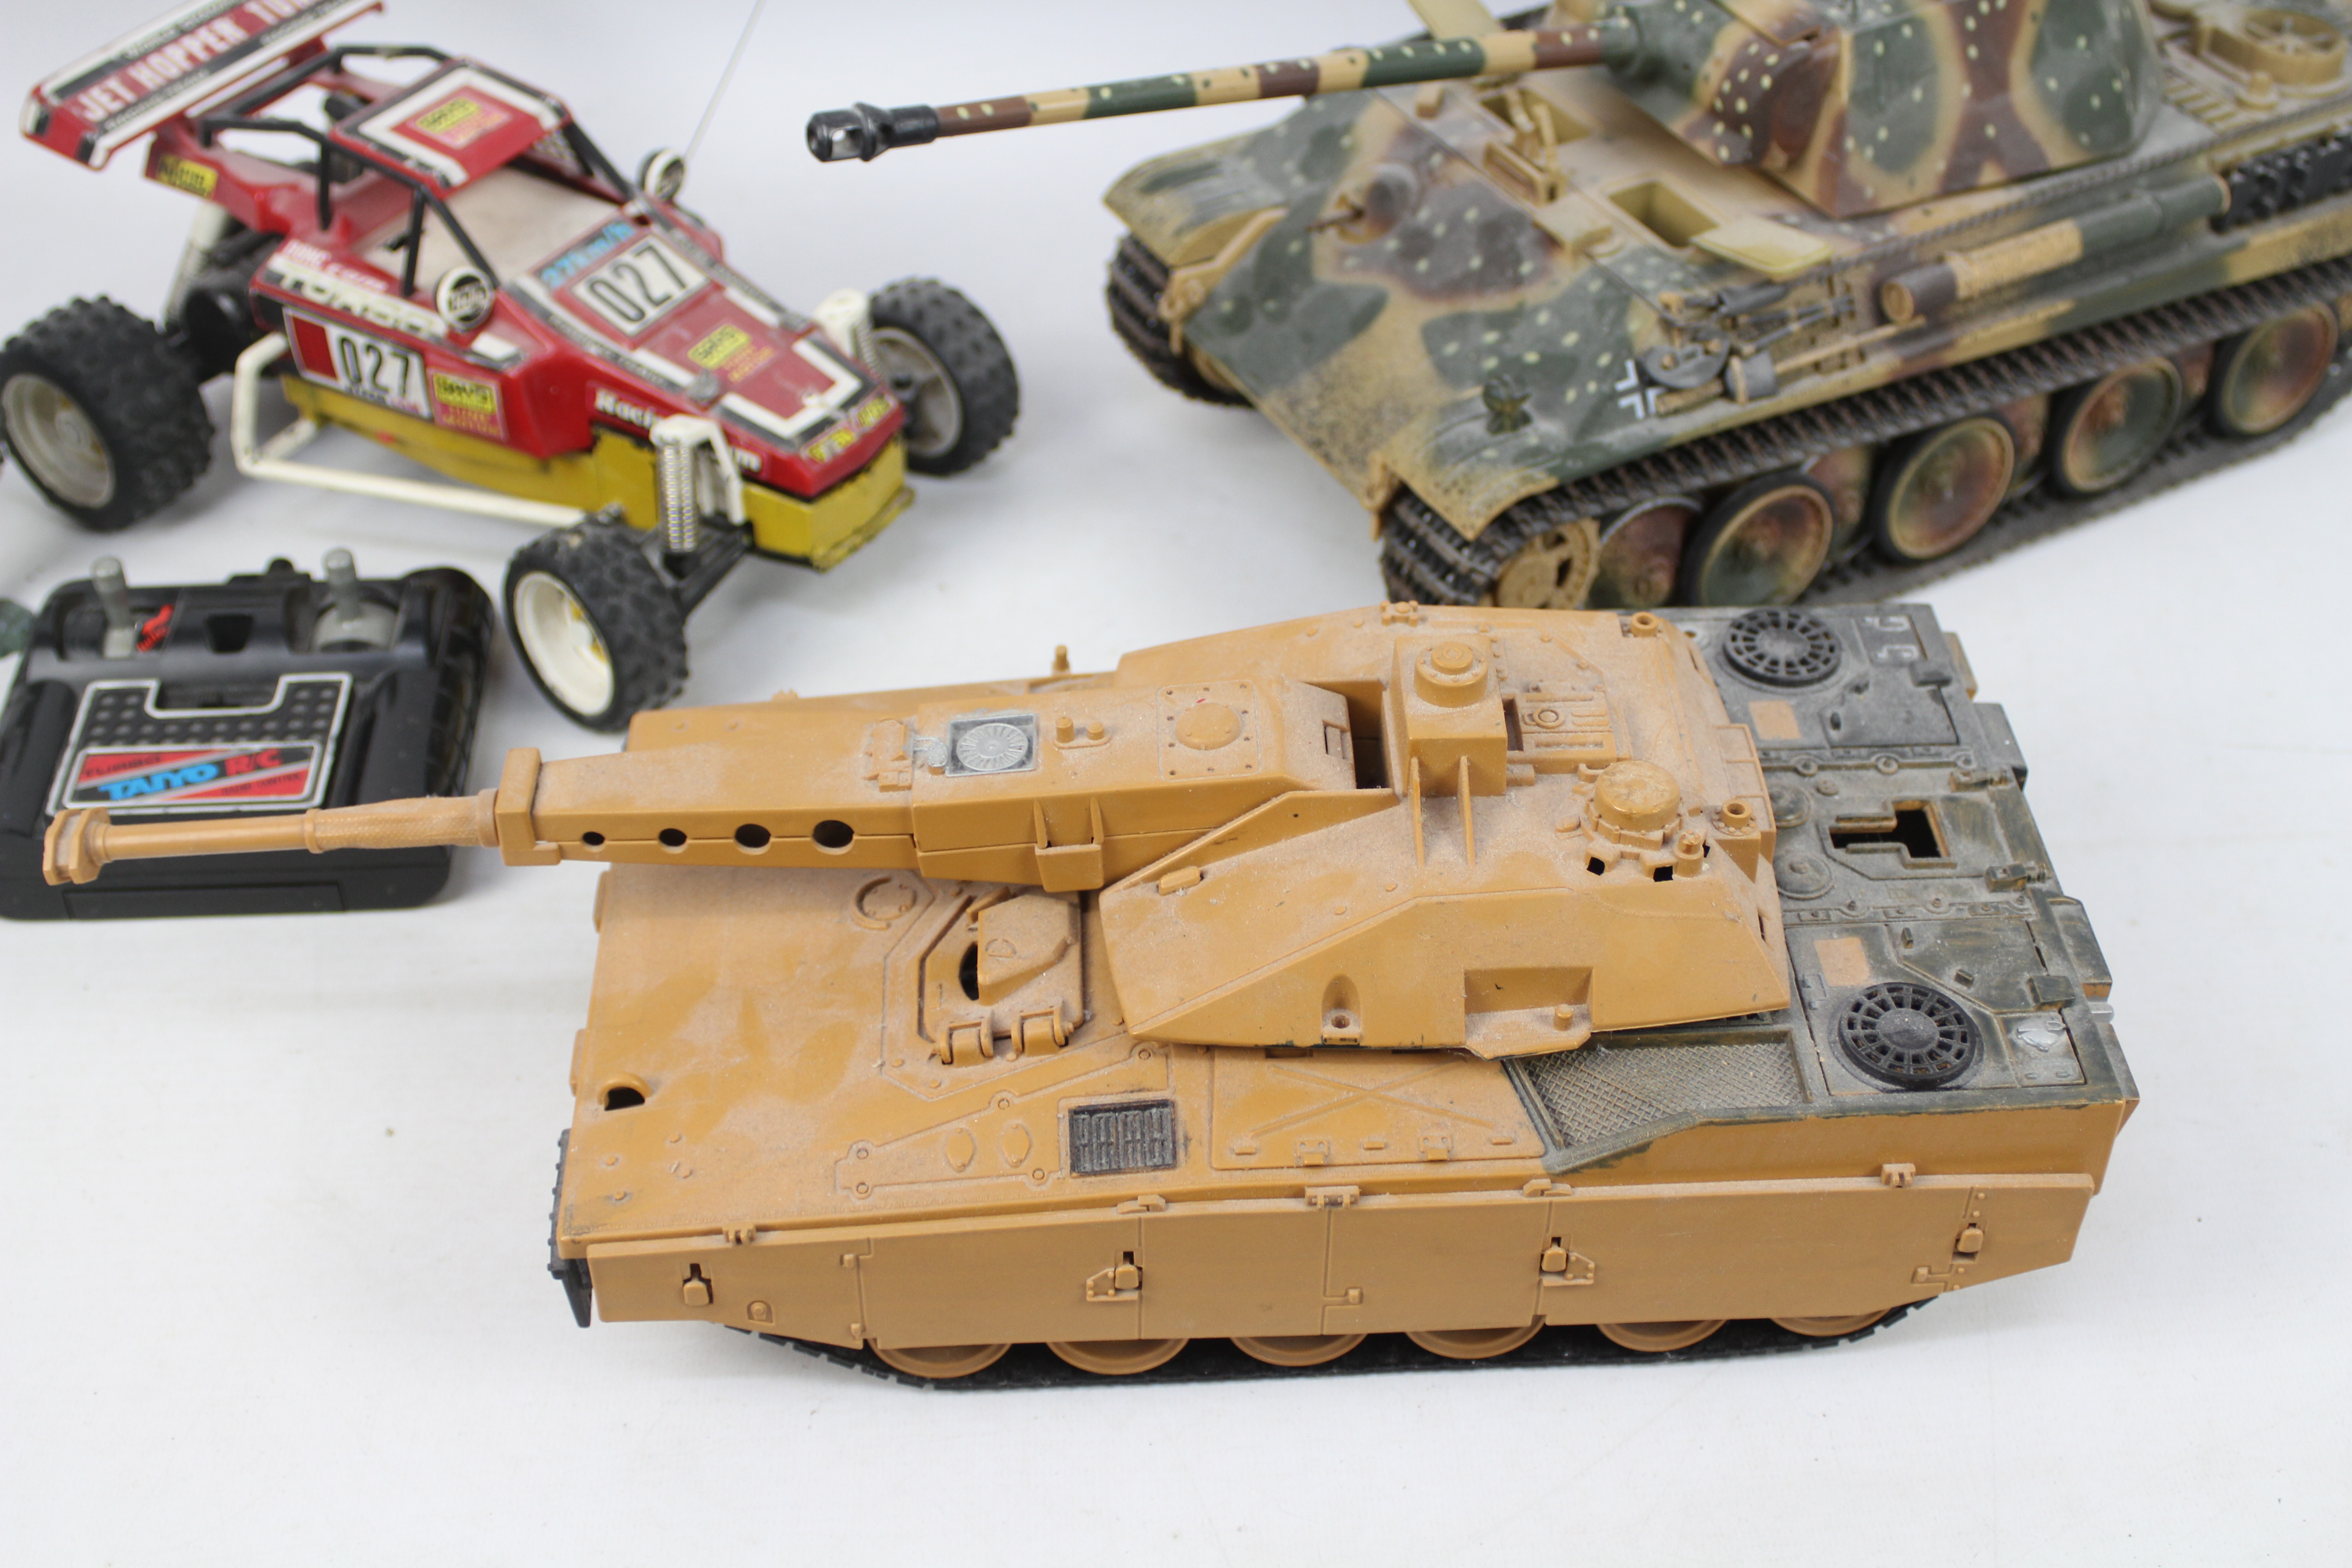 21st Century - Hasbro Bradley - Unimax - Tyco - 2 x large scale tank model, - Image 7 of 9